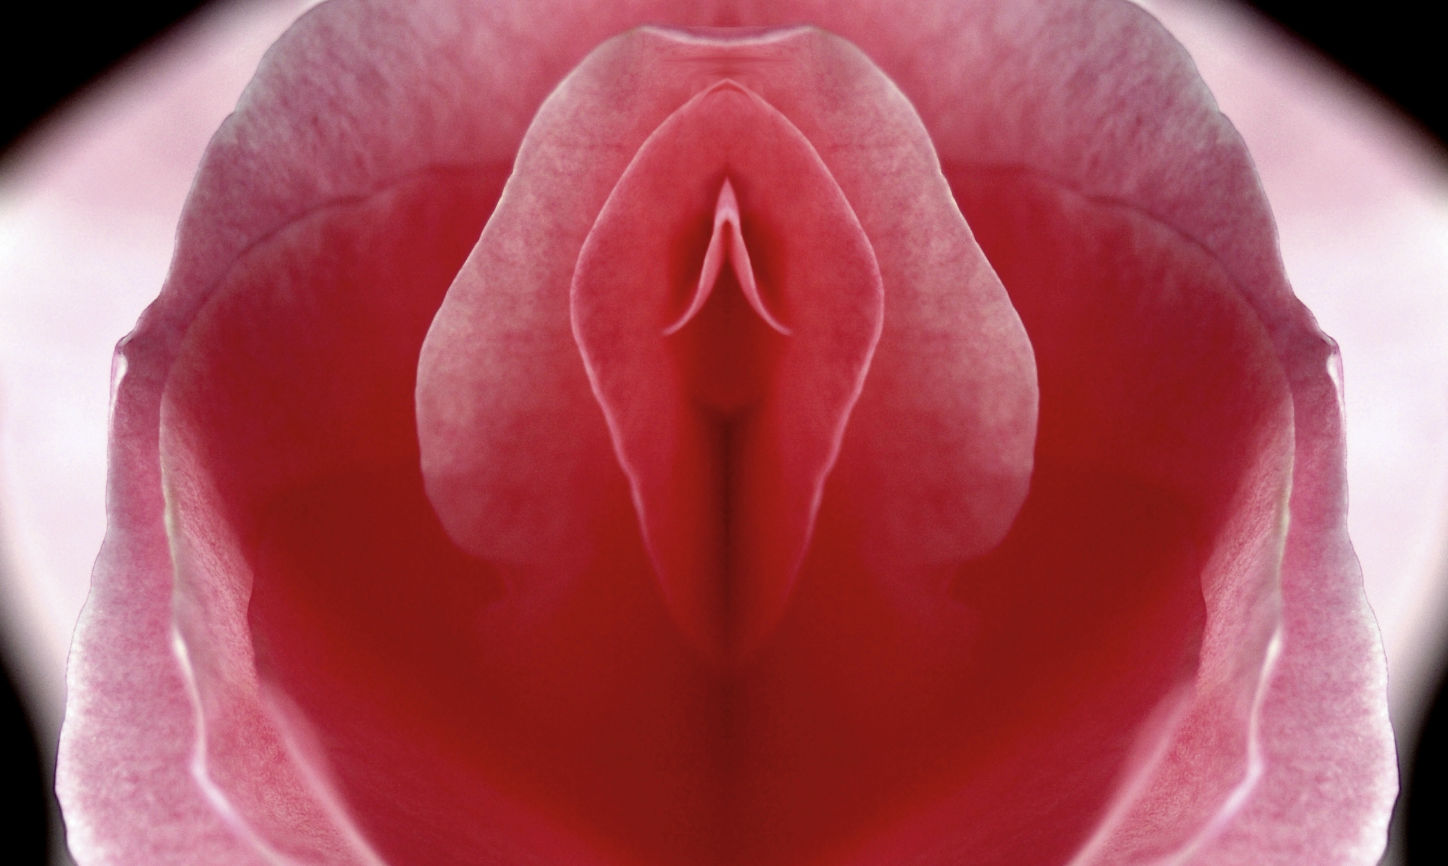 V Day stands for Vagina Pampering Day.